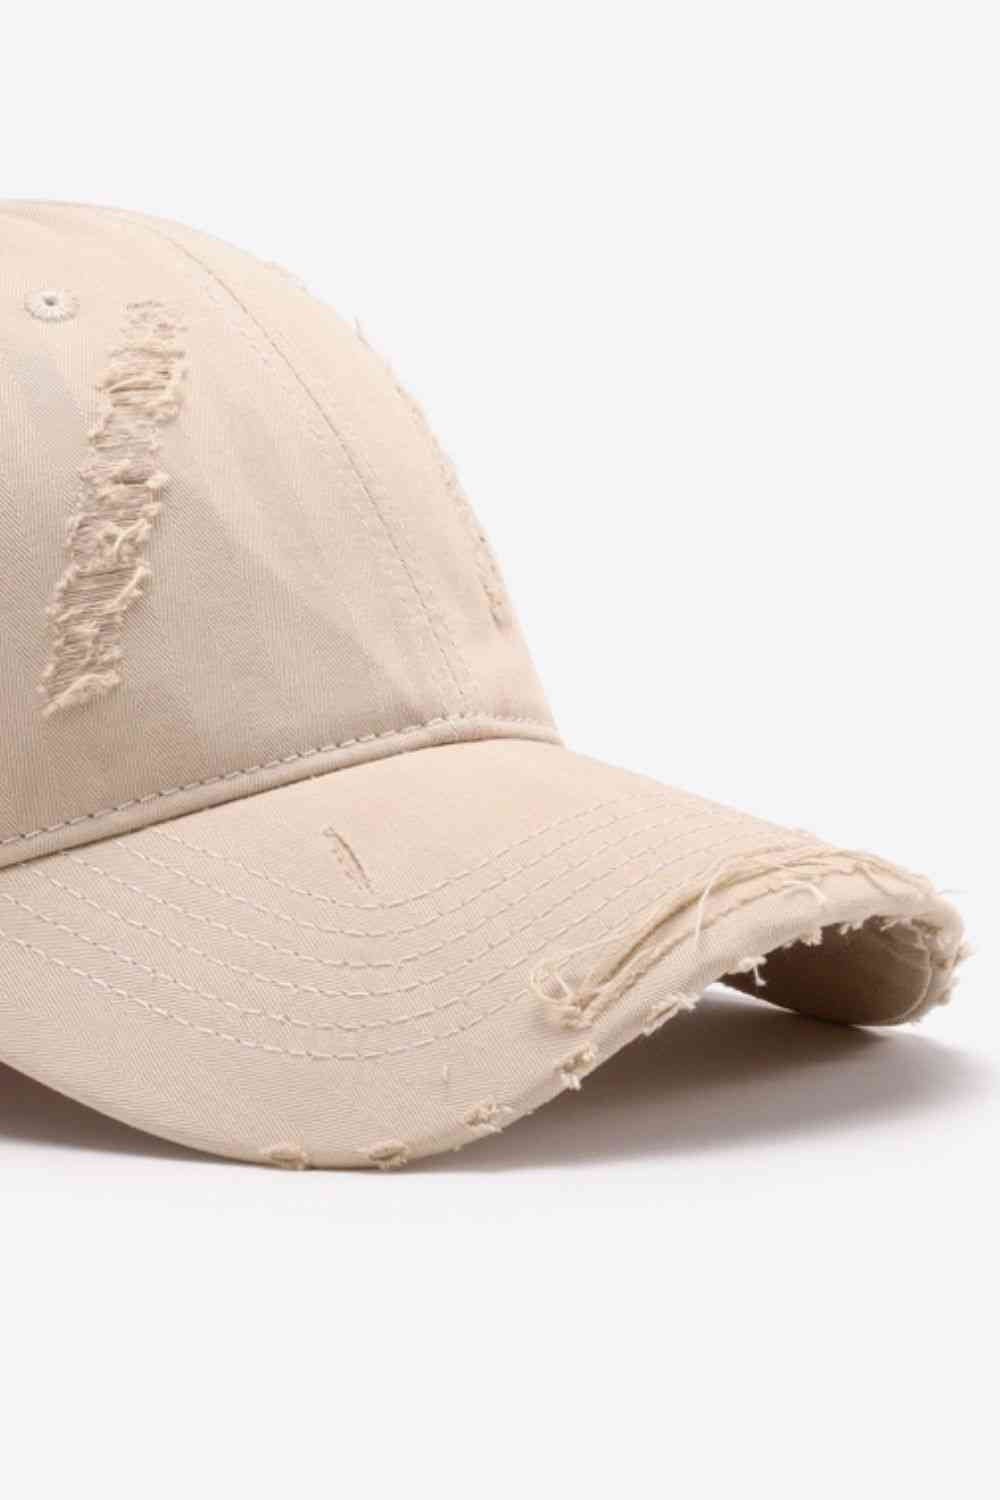 Distressed Adjustable Baseball Cap